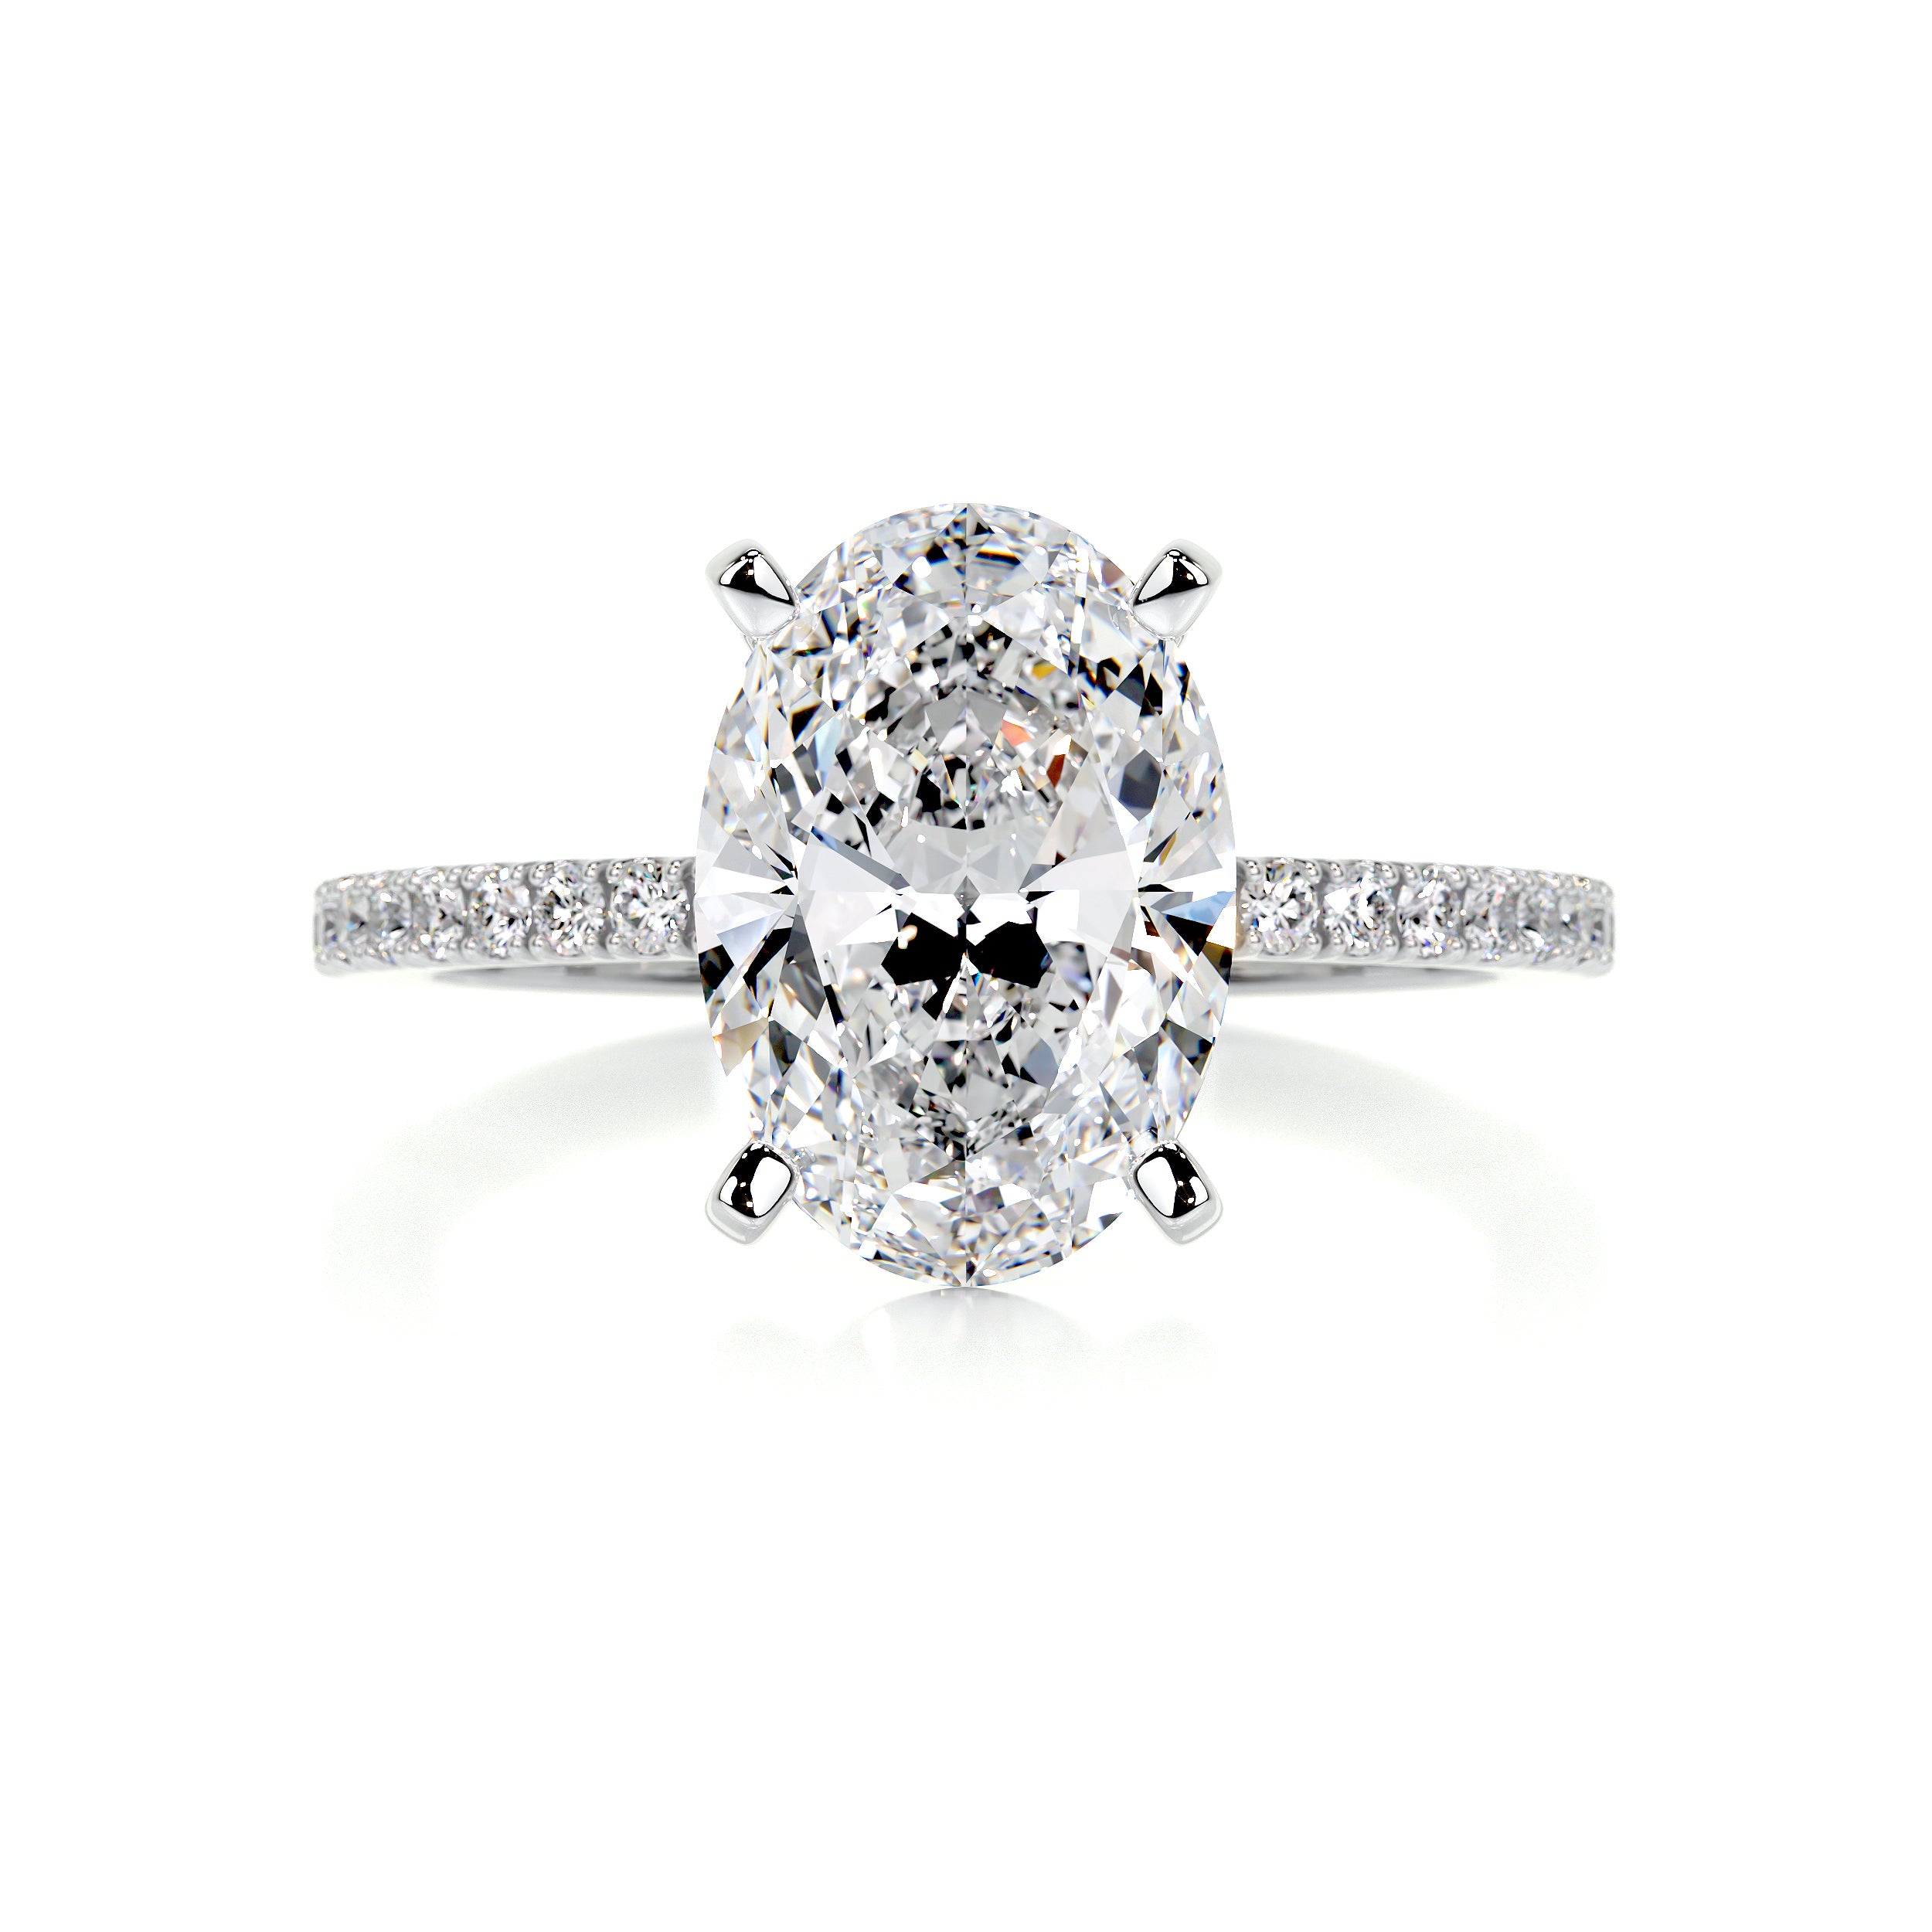 Stephanie Diamond Engagement Ring   (3.30 Carat) -14K White Gold